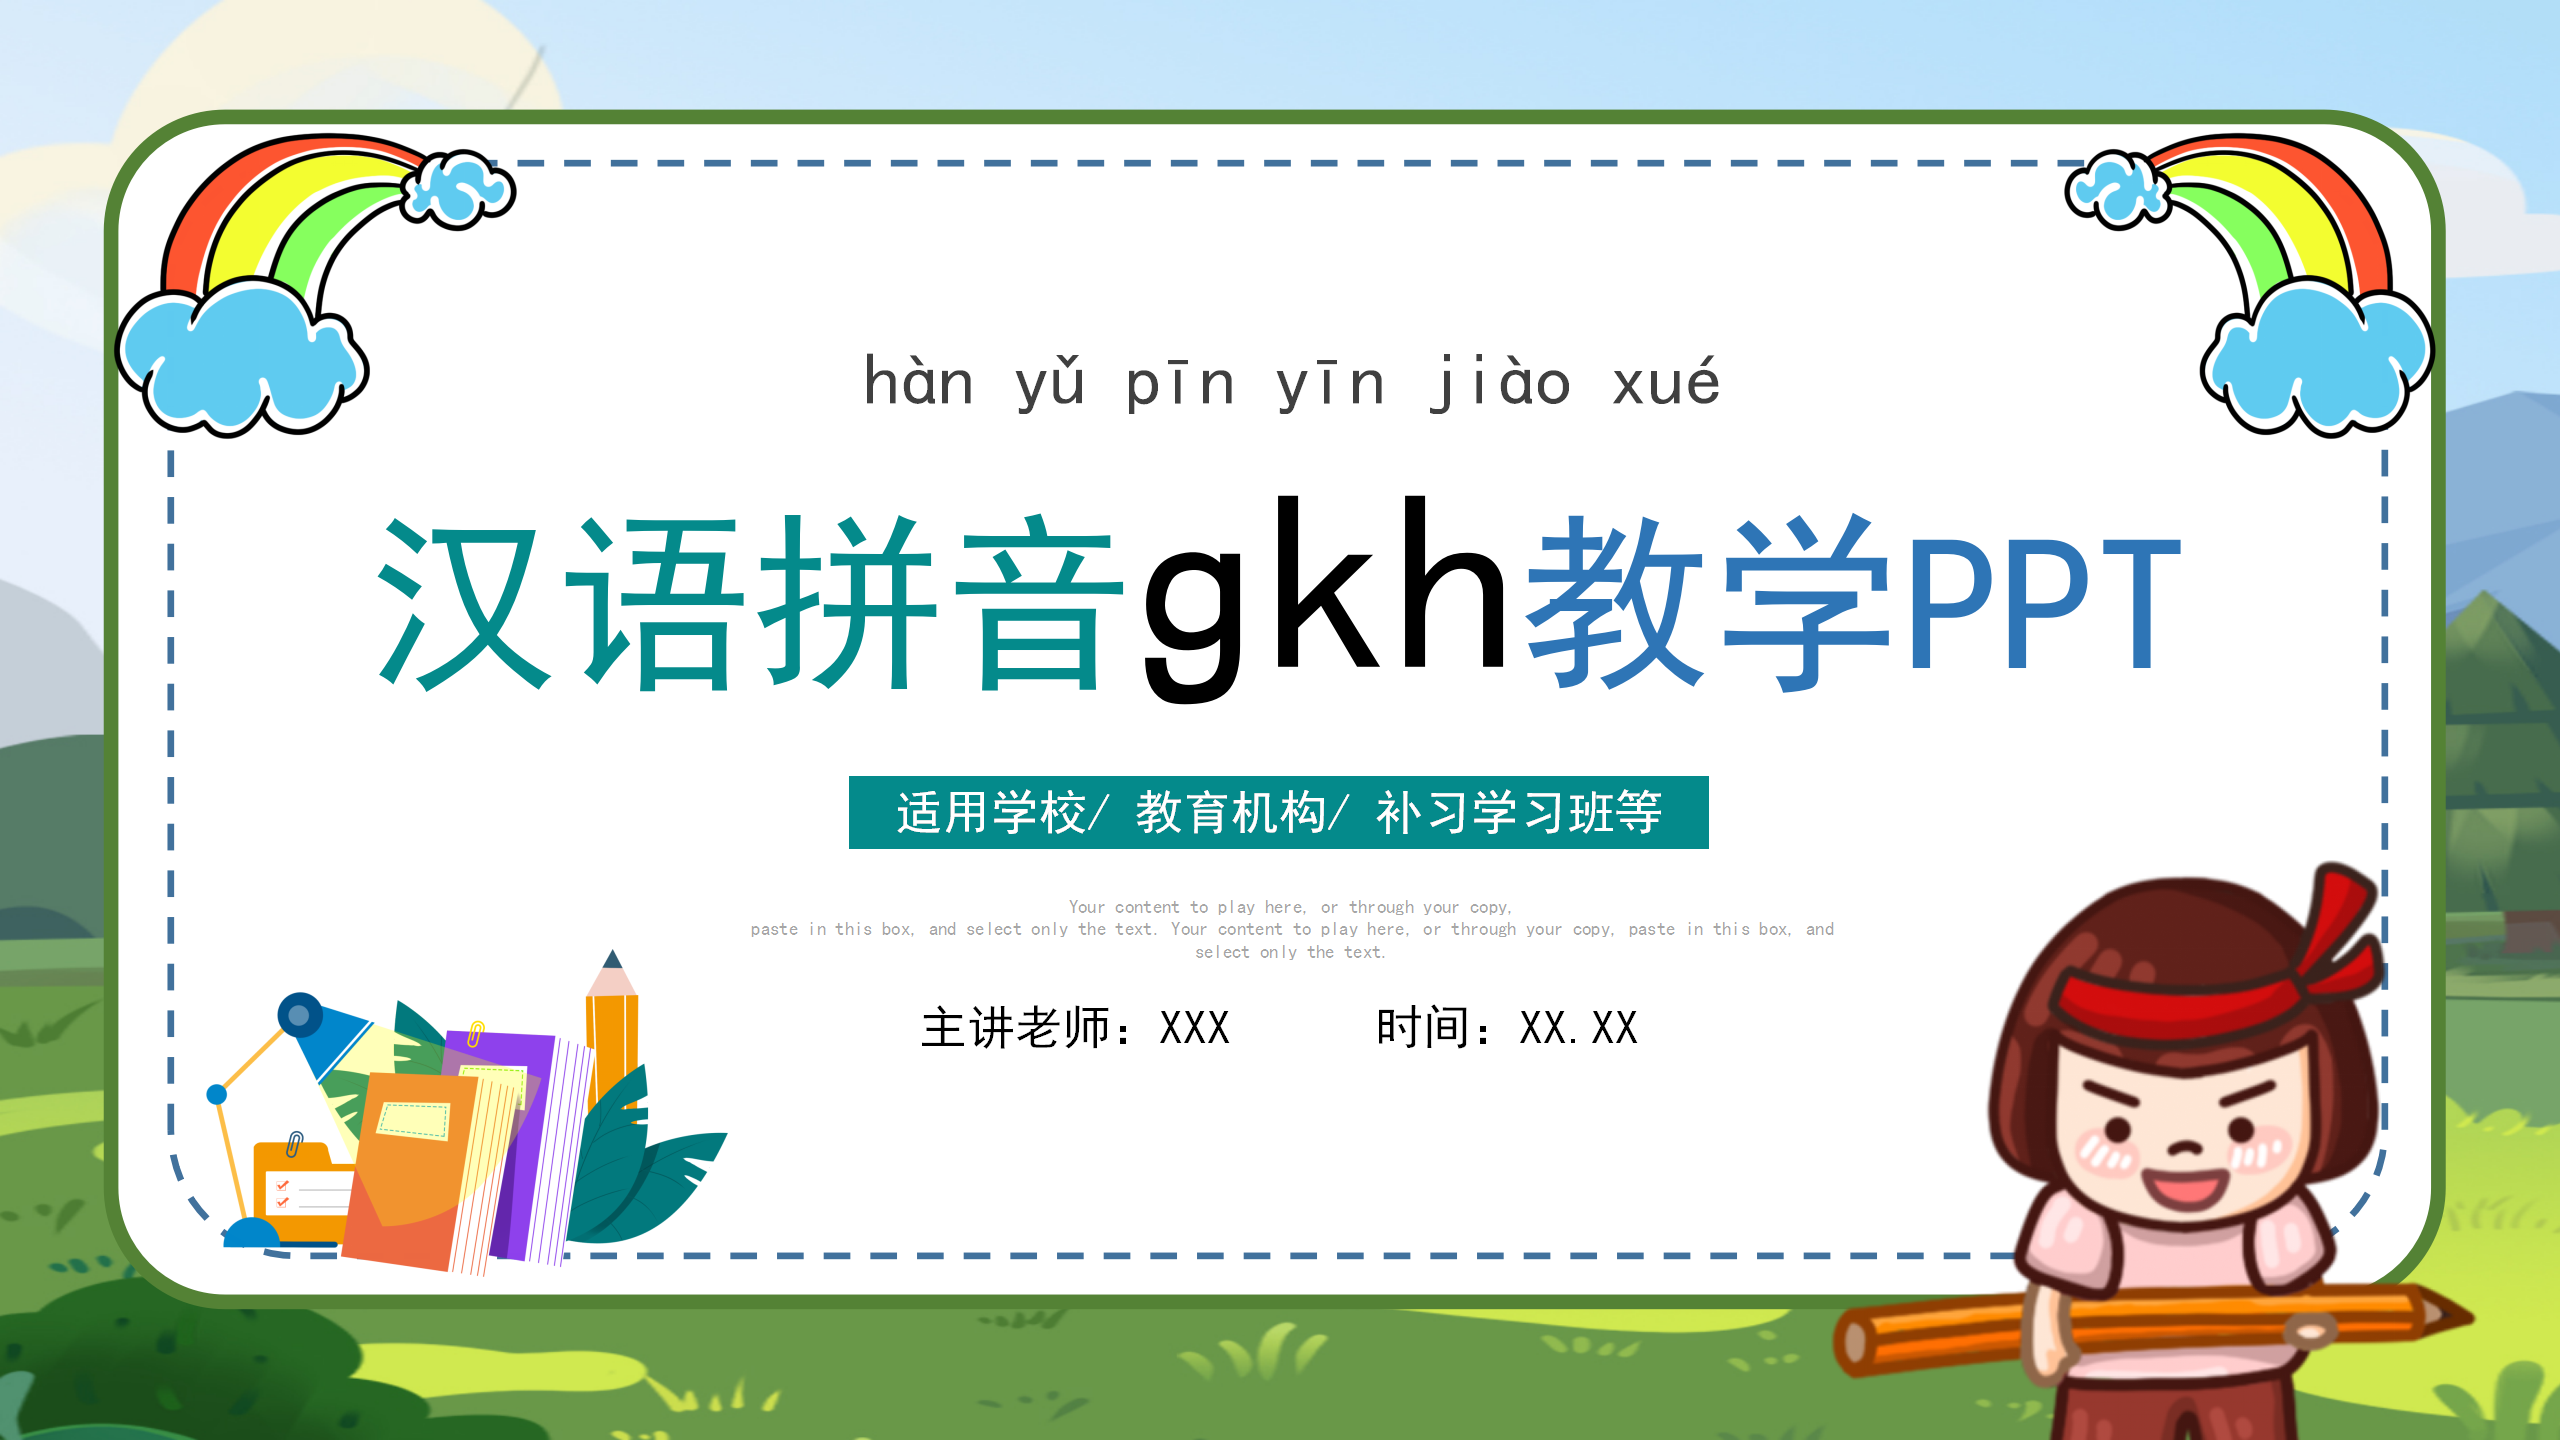 语文拼音《gkh》课件ppt模板